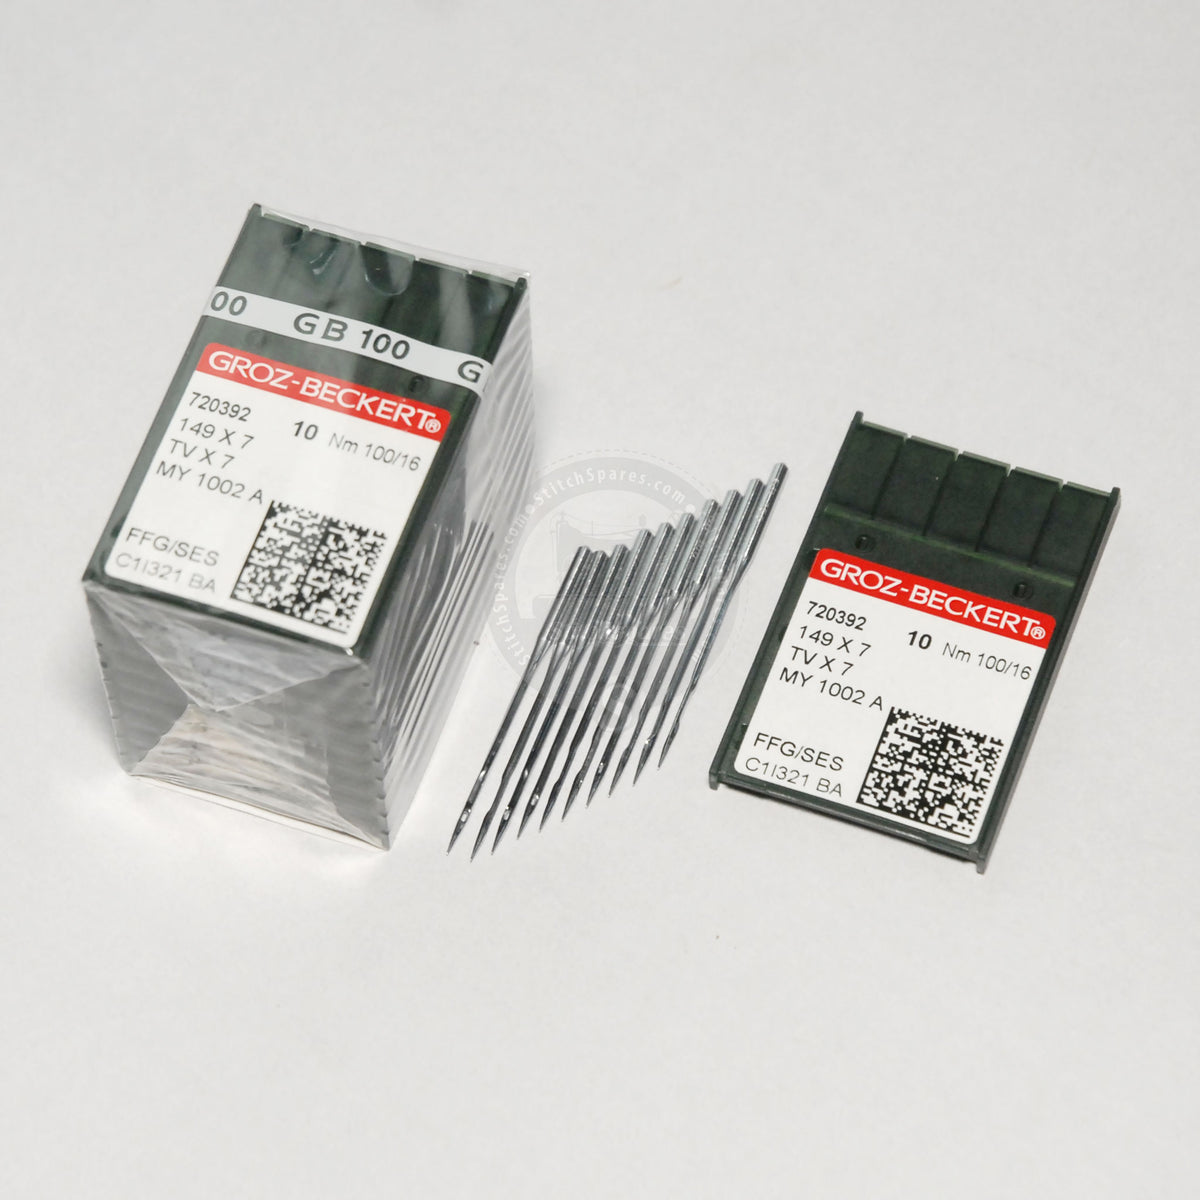 Groz-Beckert DBXK5 SAN1 Titanium Needles 75/11 Sharp, Box of 100